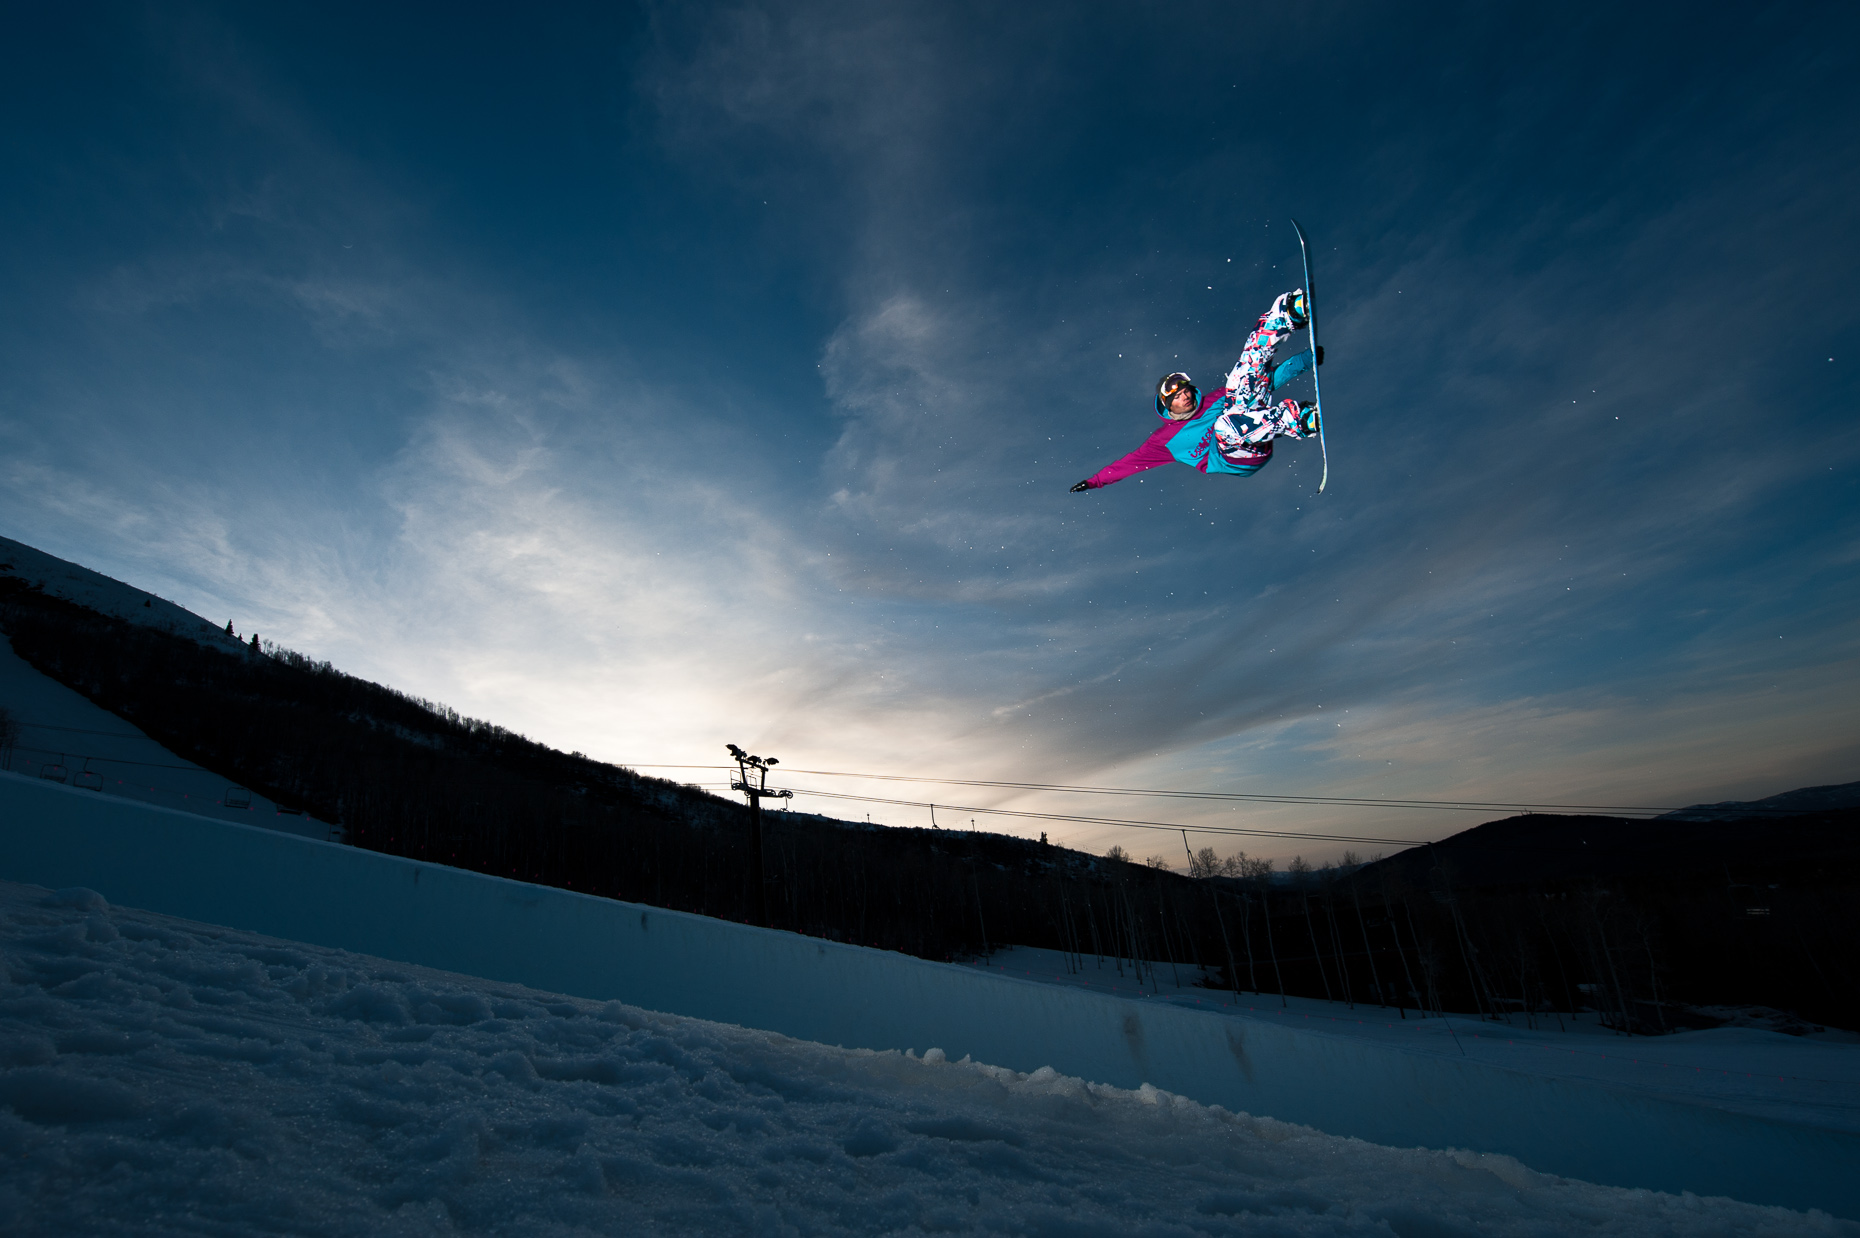 snowboarding_Christophe_Schmidt_ParkCity_April_2010_c_Brecheis-5098.jpg